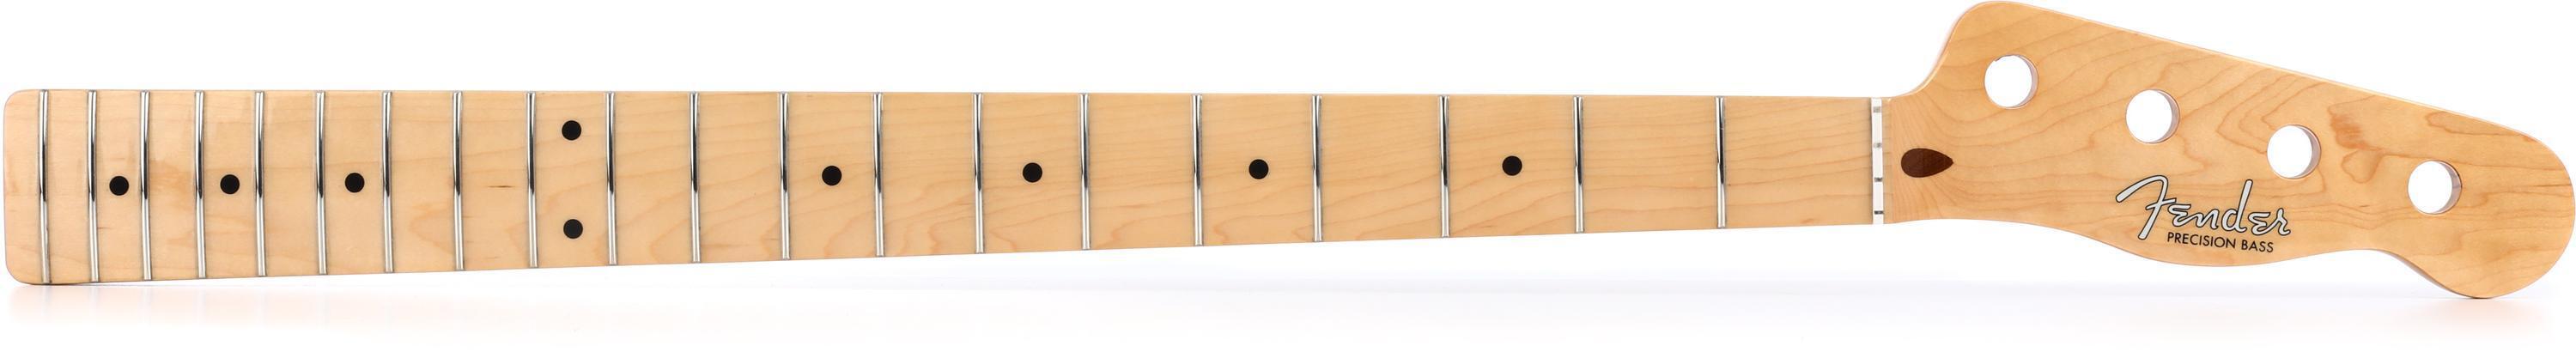 Fender '51 Precision Bass Neck - Maple Fingerboard